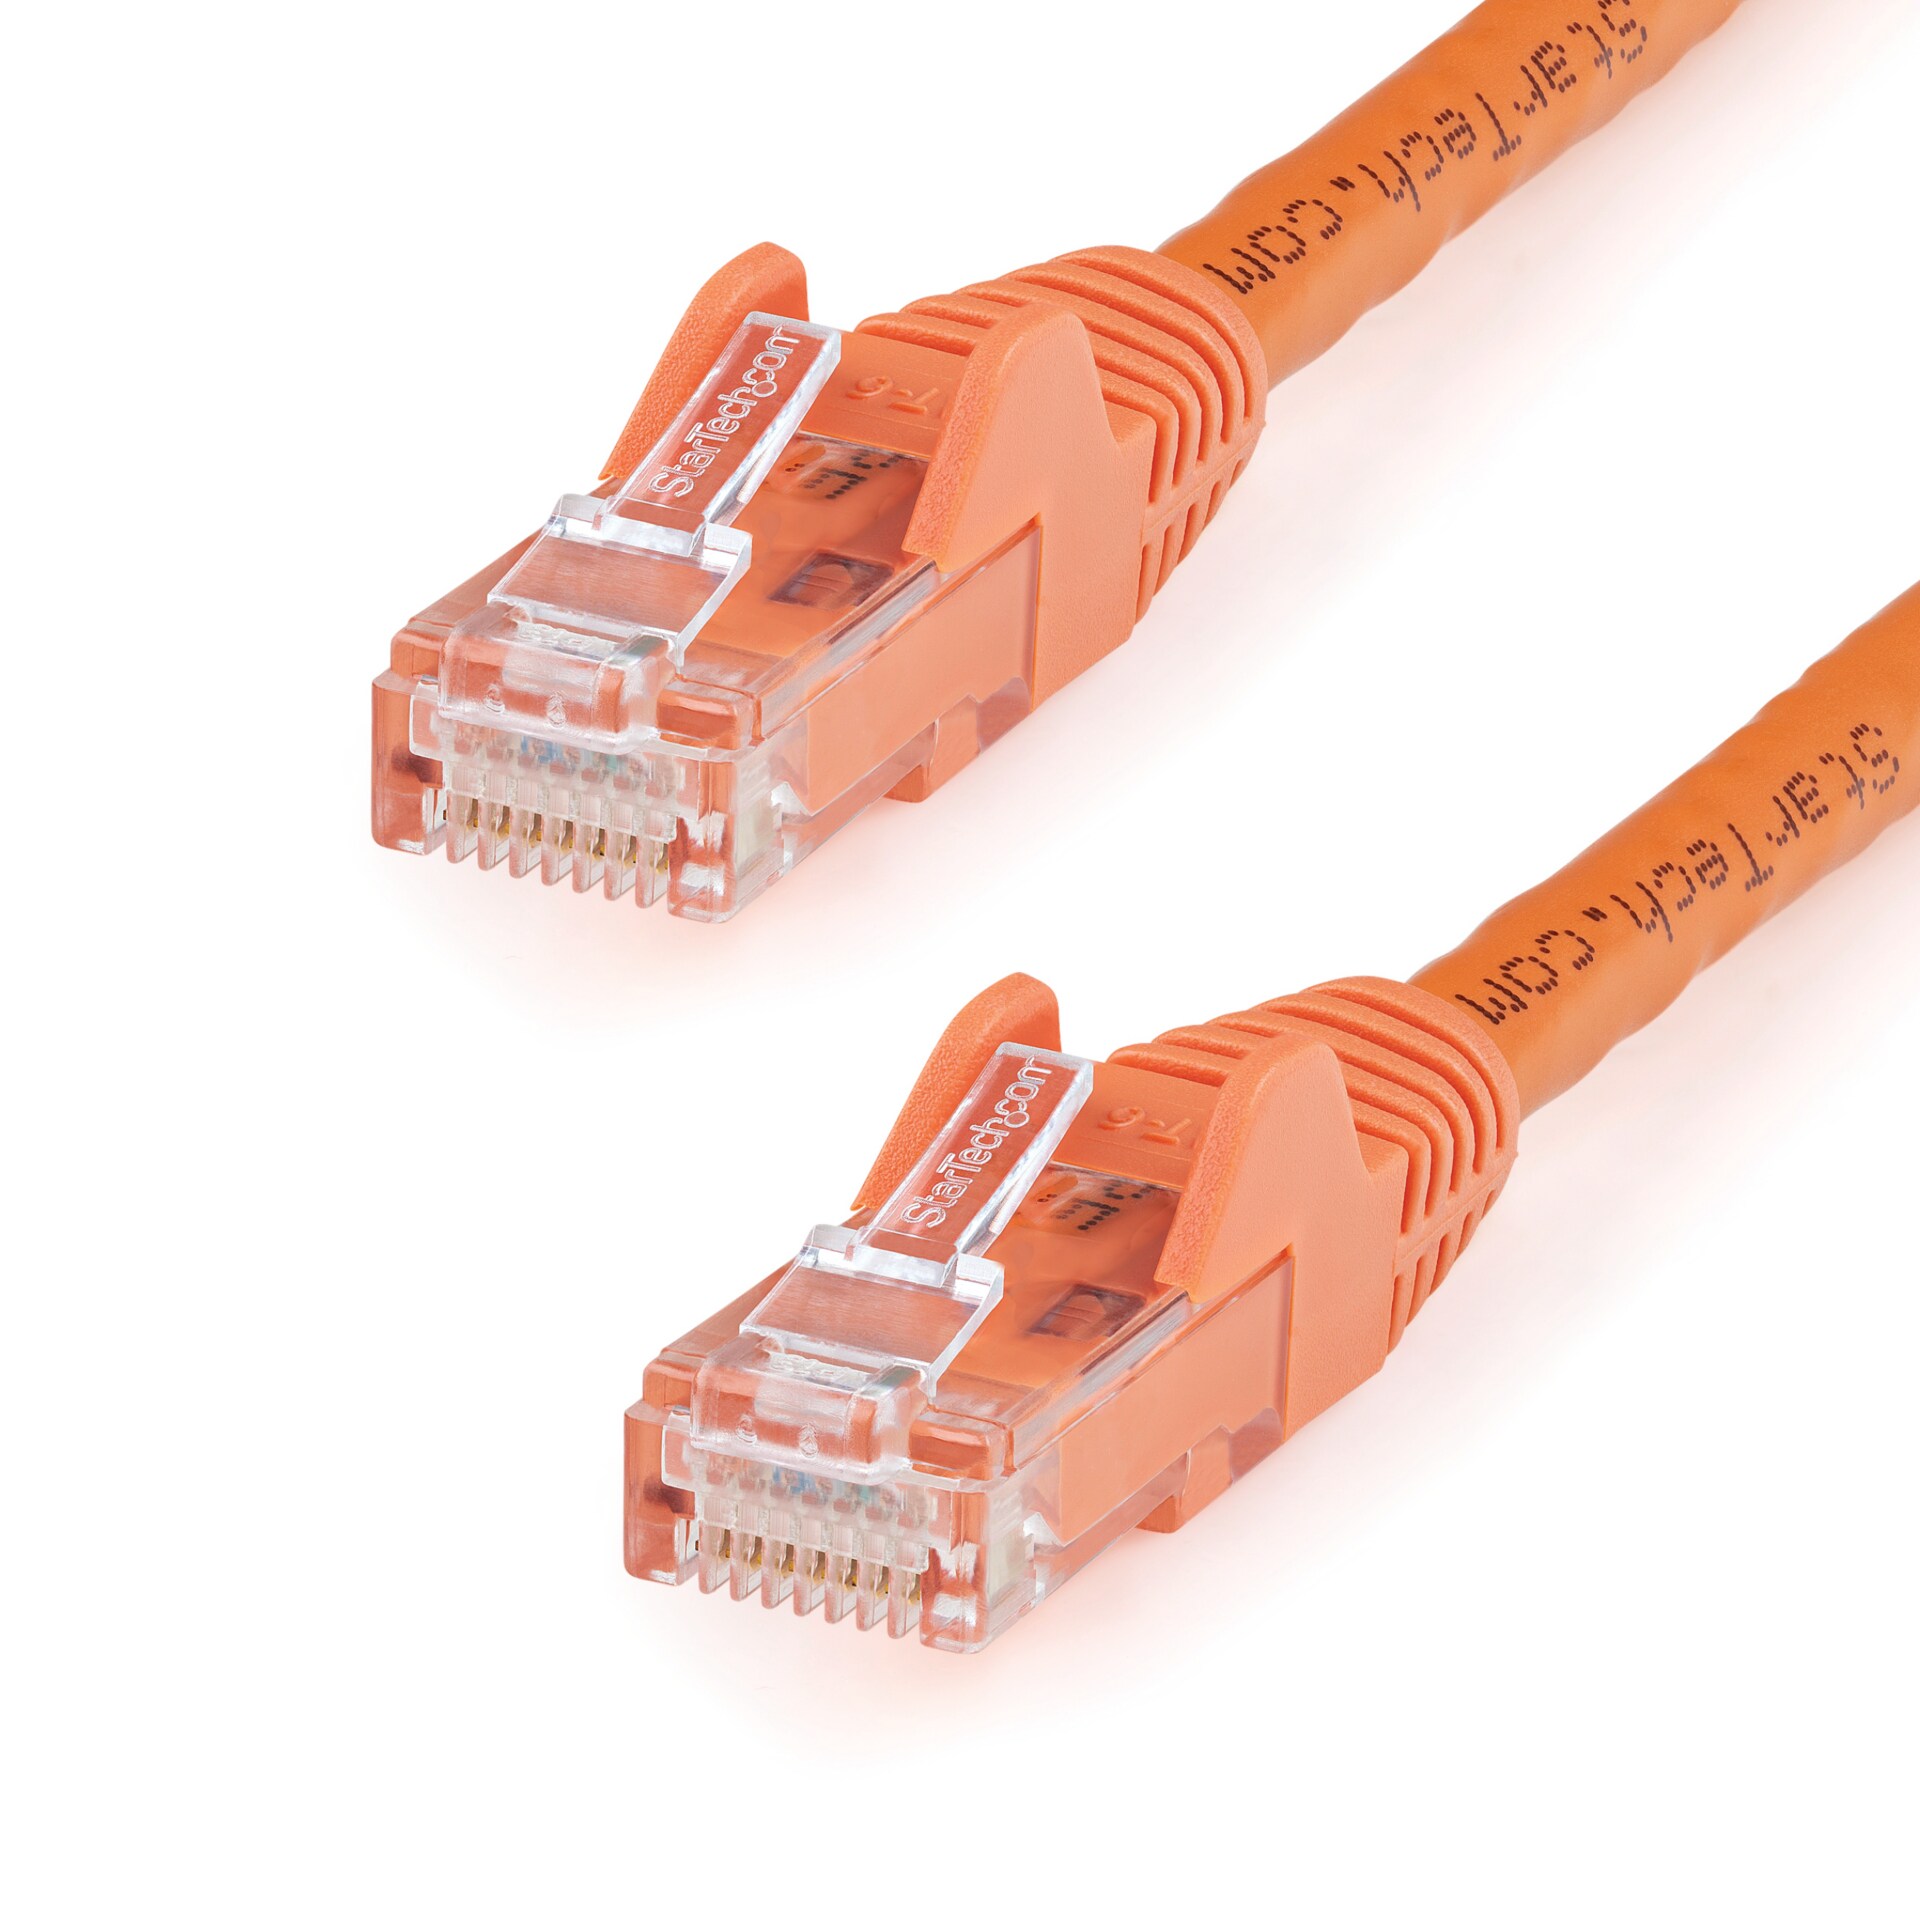 StarTech.com CAT6 Ethernet Cable 5' Orange 650MHz PoE Snagless Patch Cord